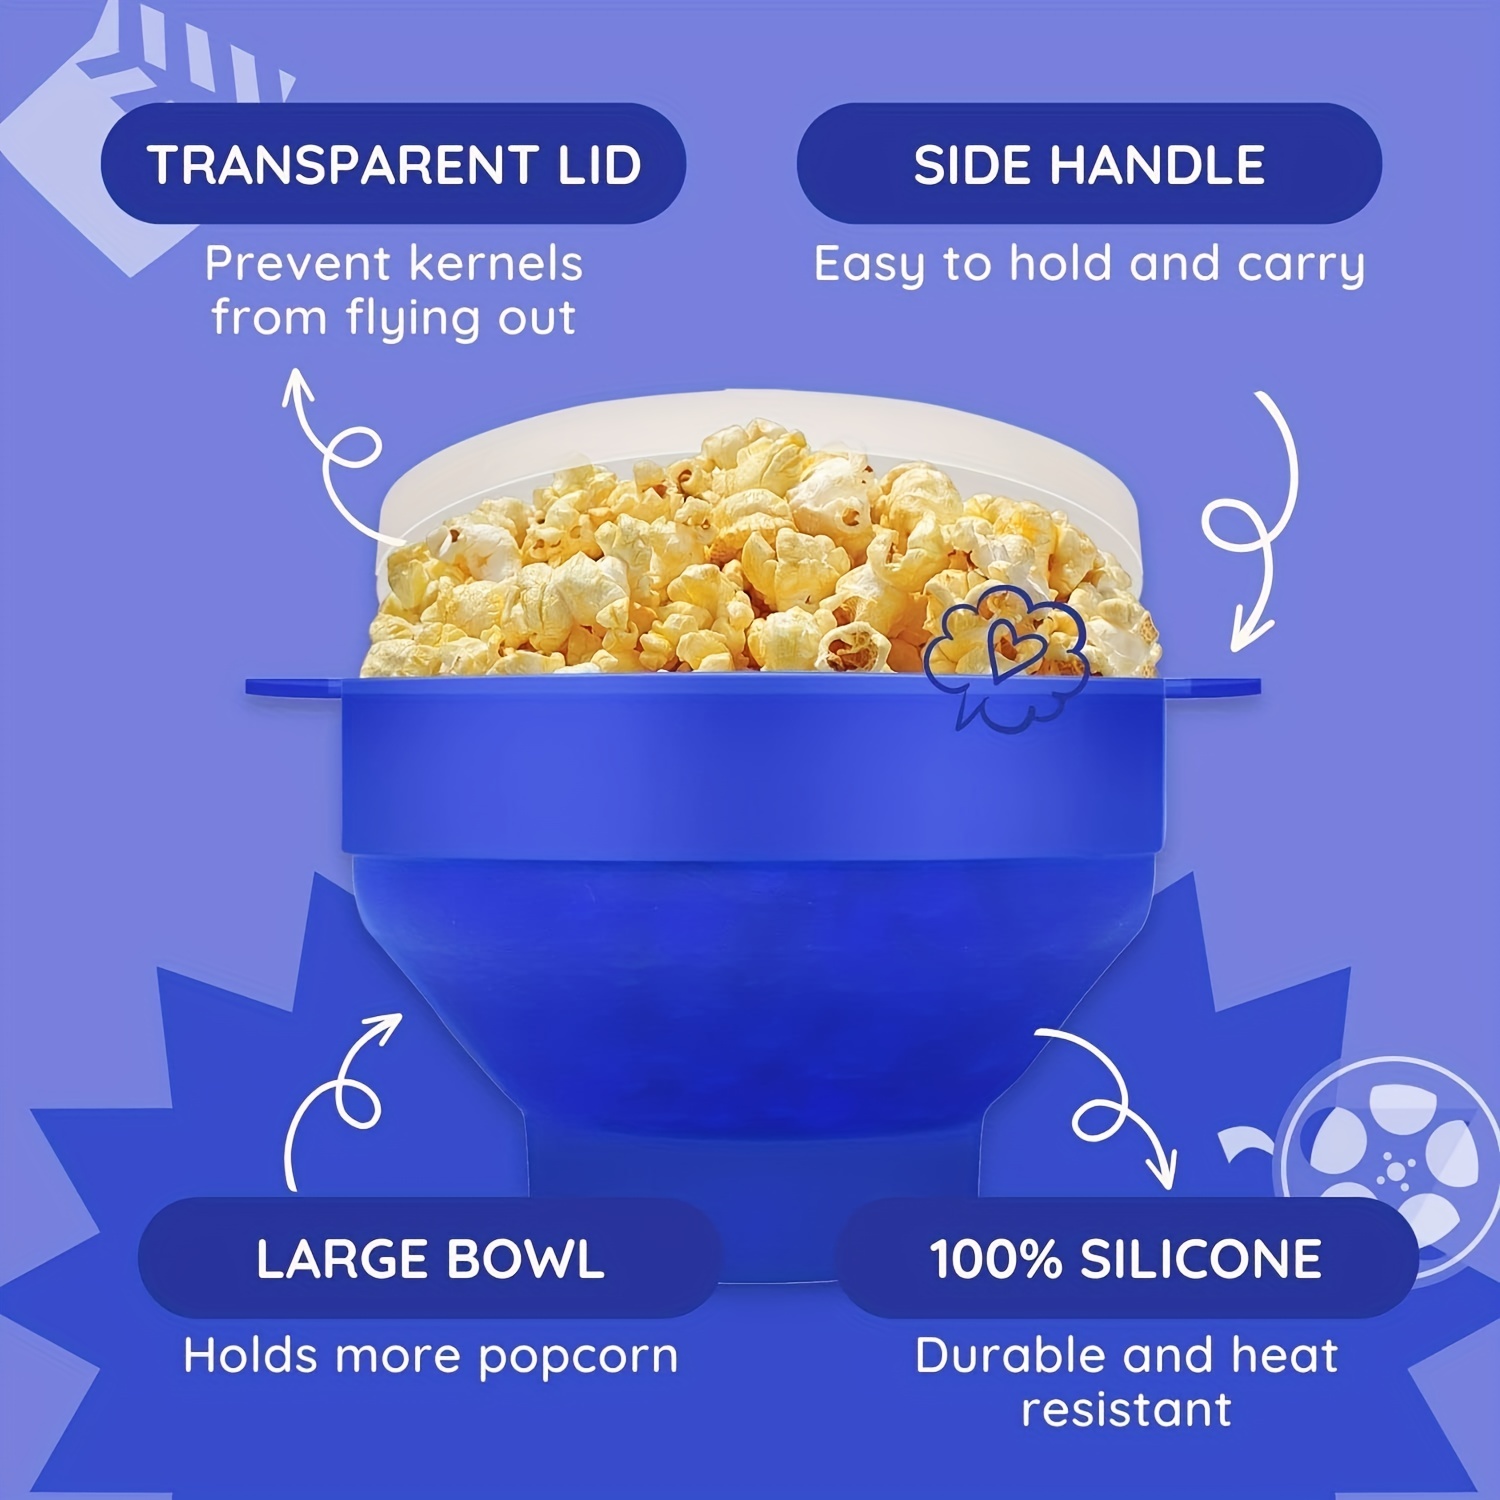 Salbree Microwave Popcorn Popper - Blue 